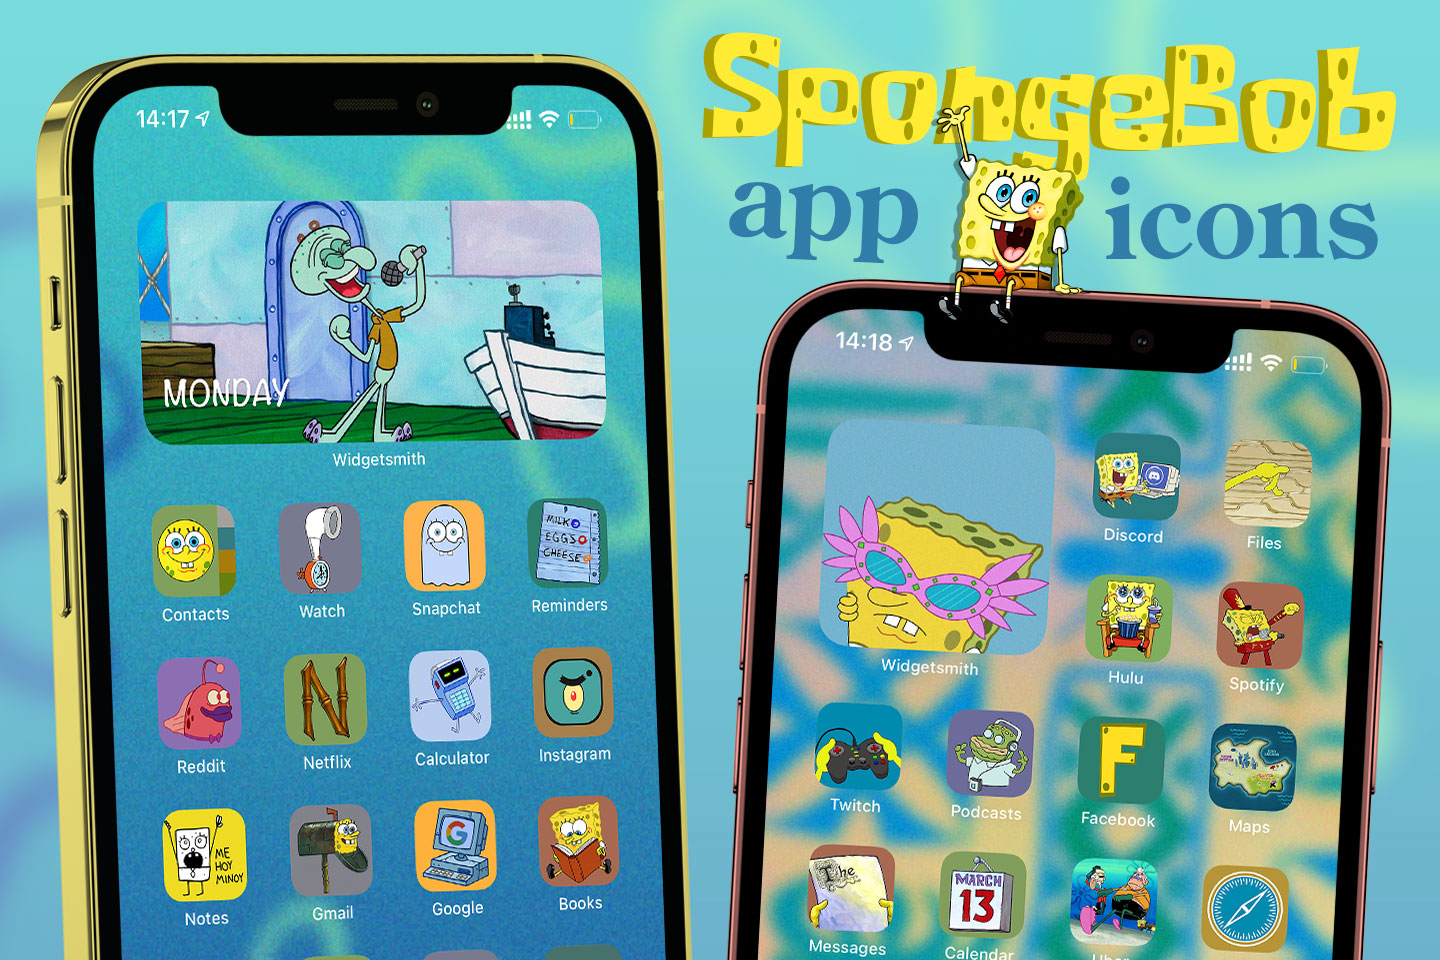 spongebob app icons pack